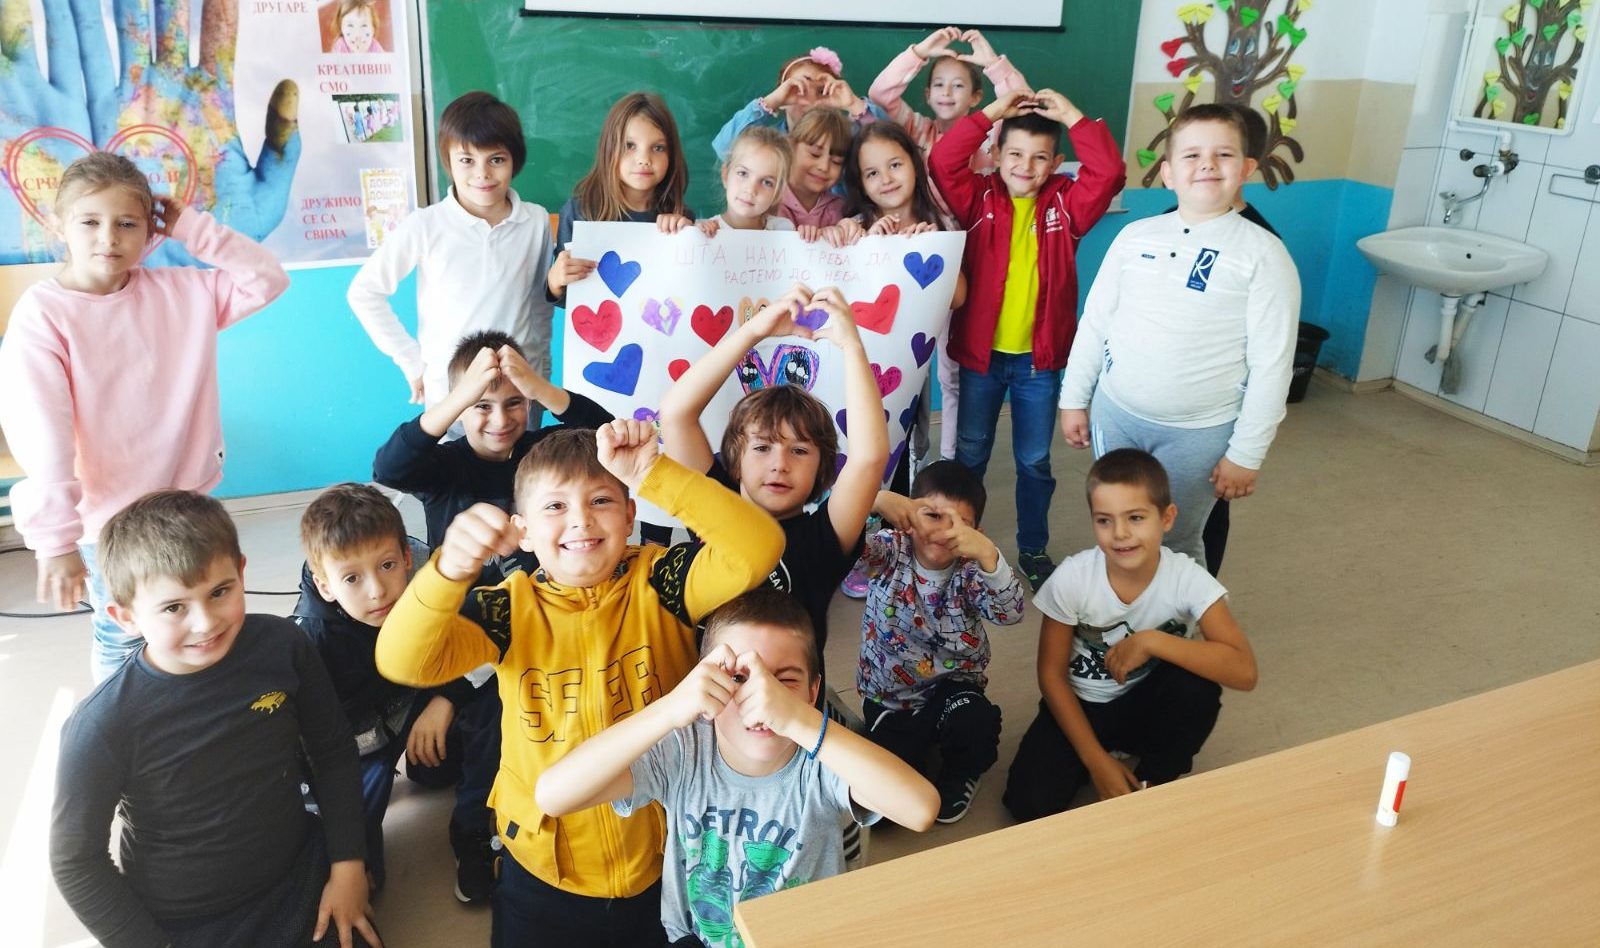 Migrant and refugee children attend schools in Vranje